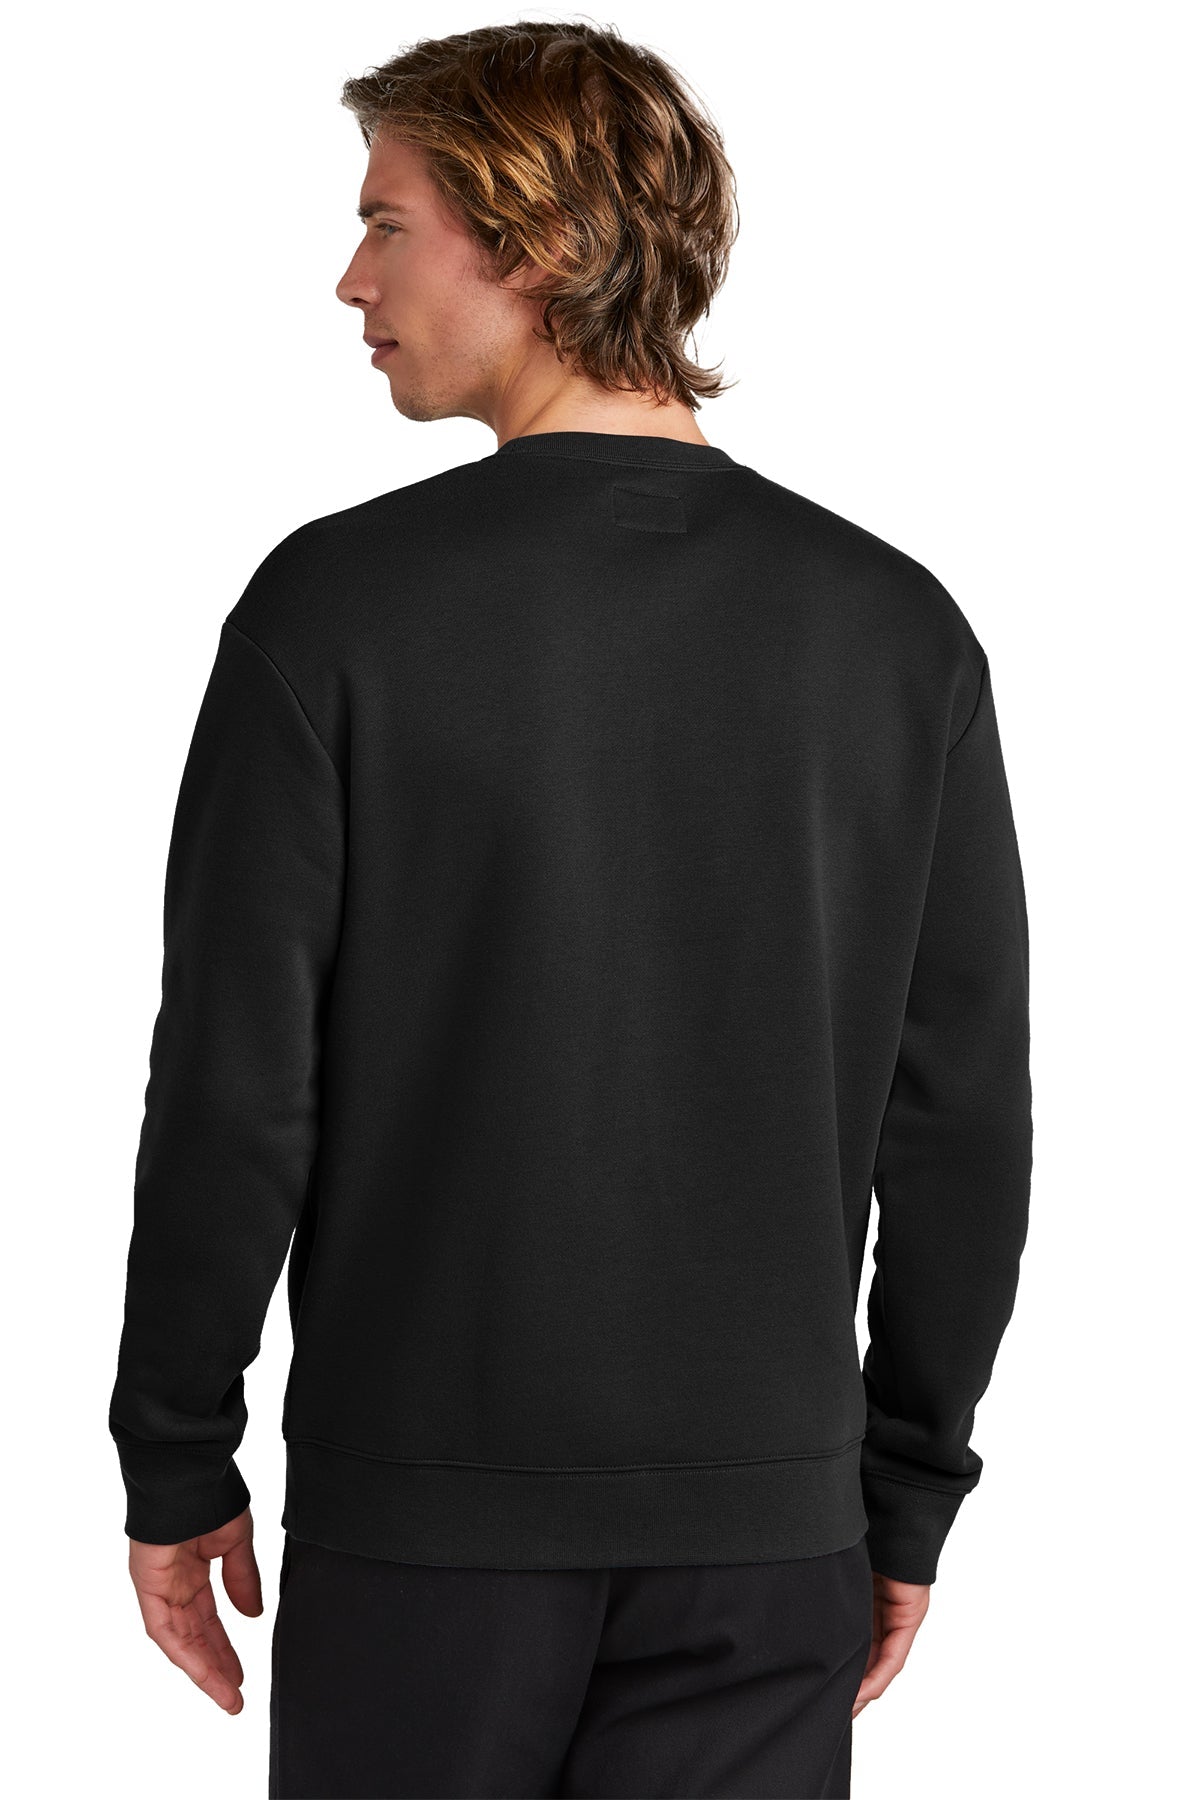 New Era Heritage Fleece Custom Pocket Sweatshirts, Black